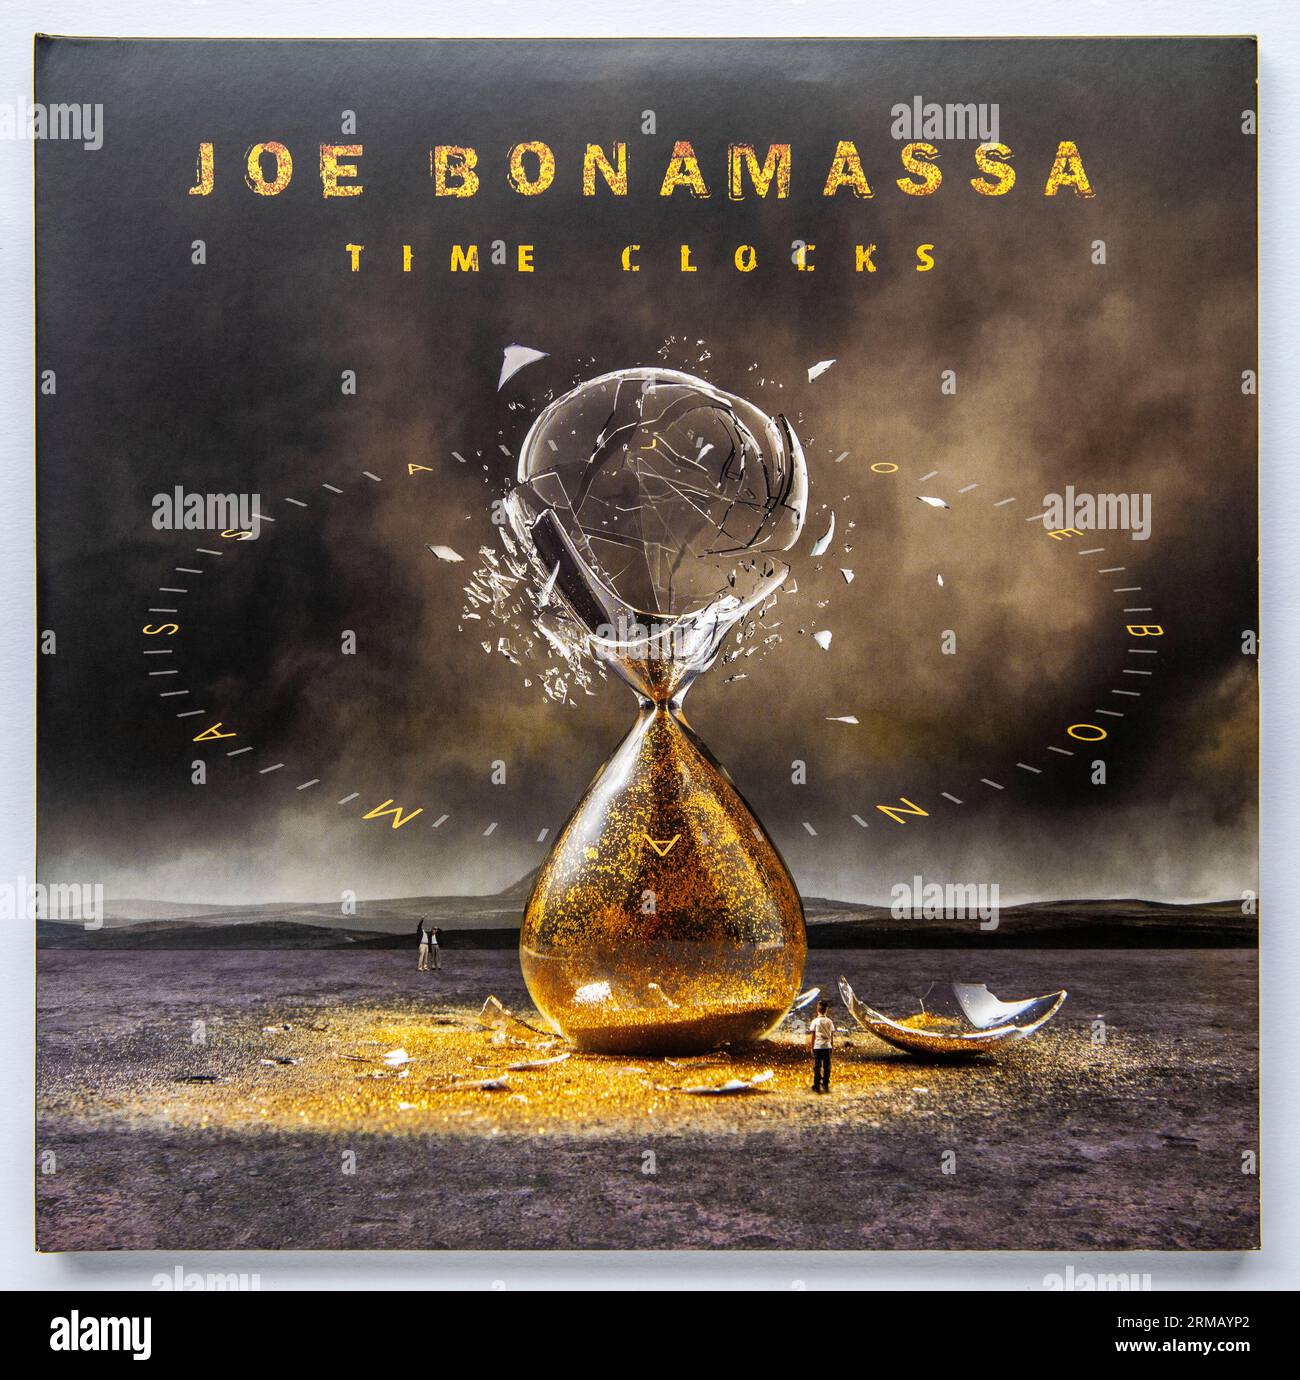 Reprise LP de Time Clocks, le 15e album studio de Joe Bonamassa, sorti en 2021 Banque D'Images